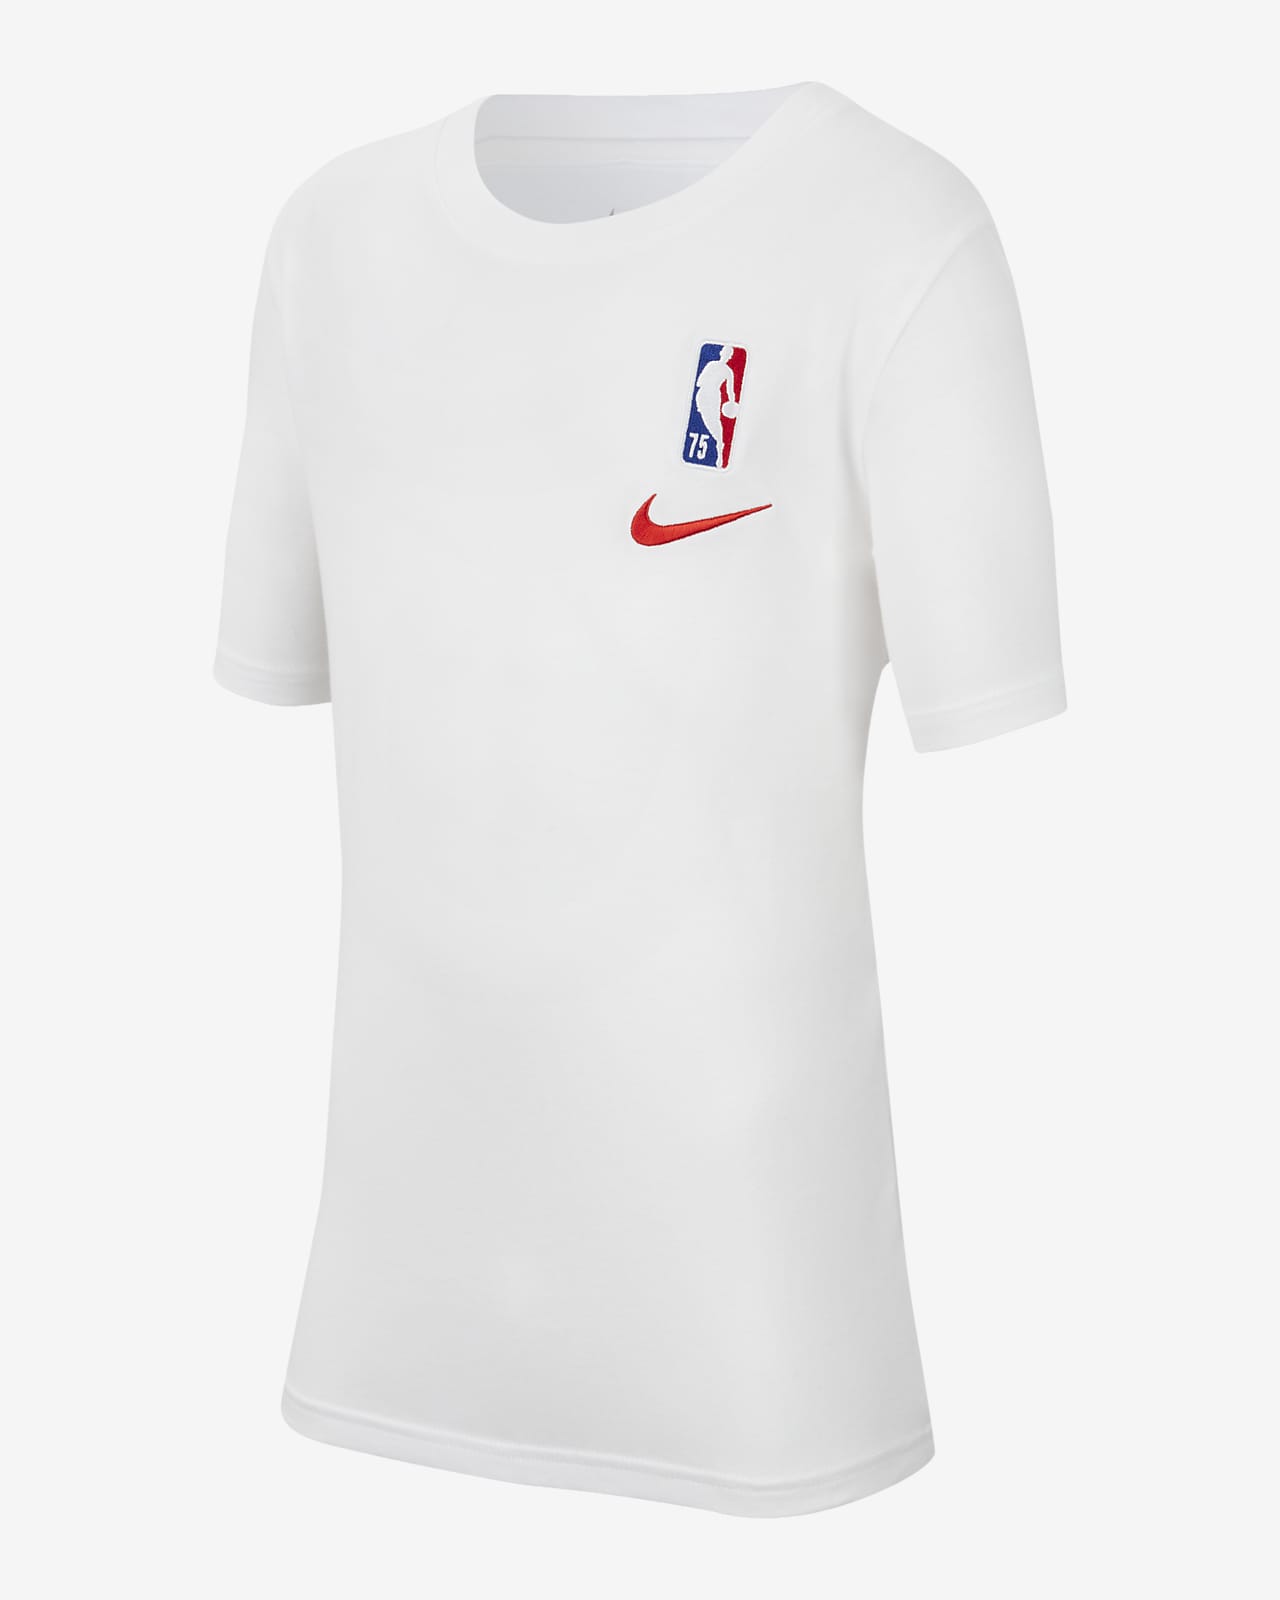 Team 31 Older Kids' Nike NBA T-Shirt